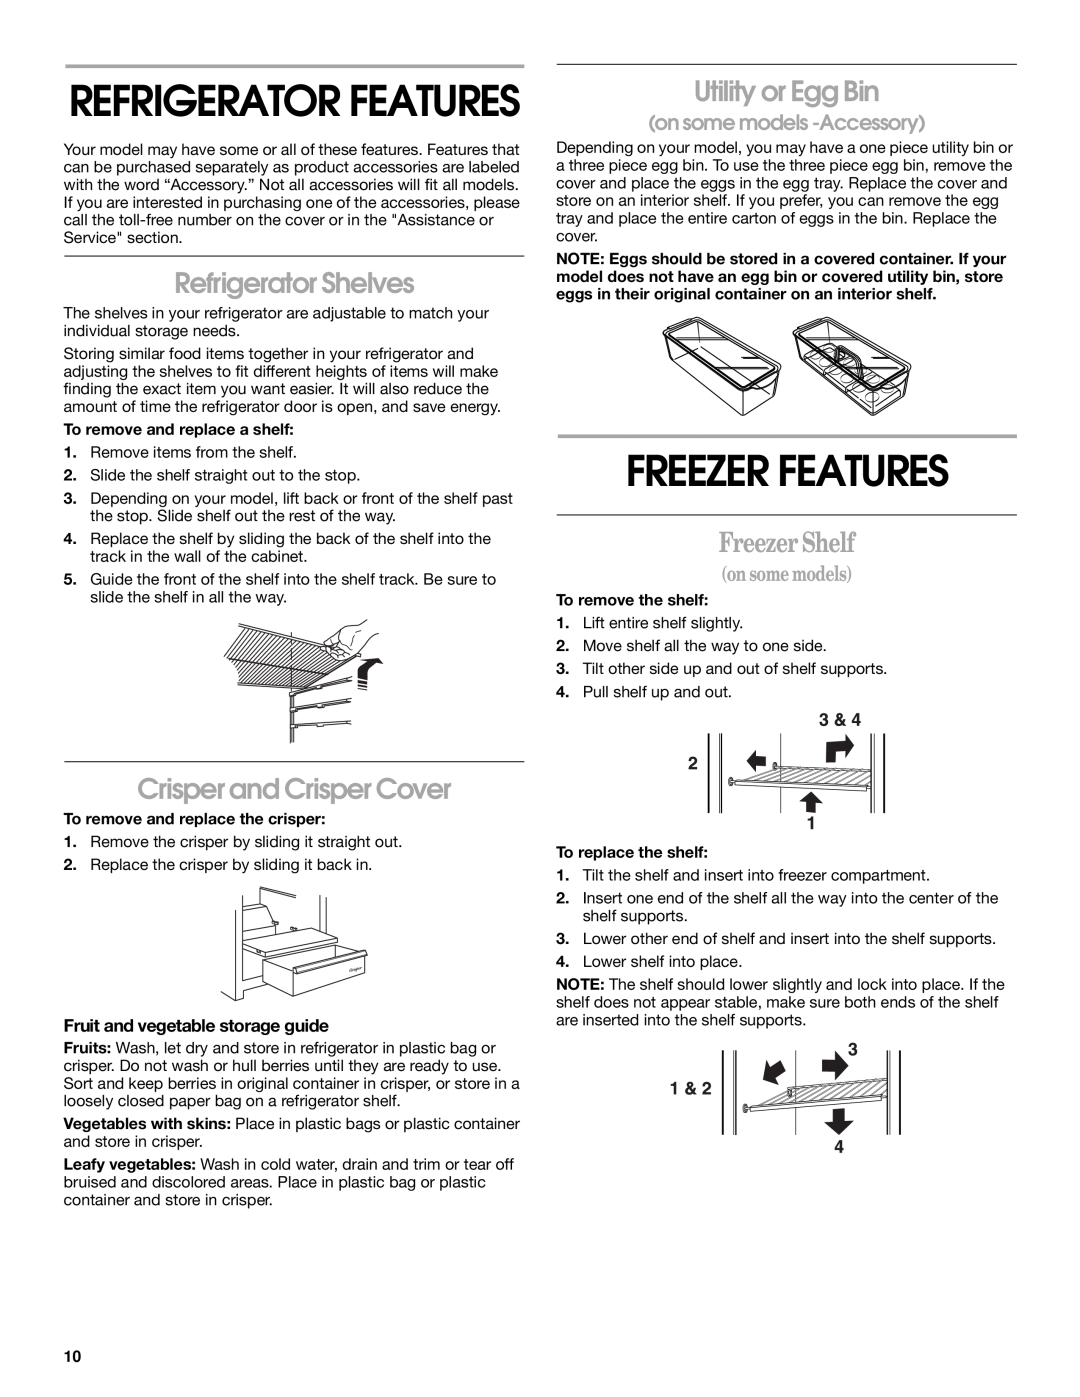 Crosley 2209920 manual Freezer Features, Refrigerator Shelves, Crisper and Crisper Cover, Utility or Egg Bin, Freezer Shelf 